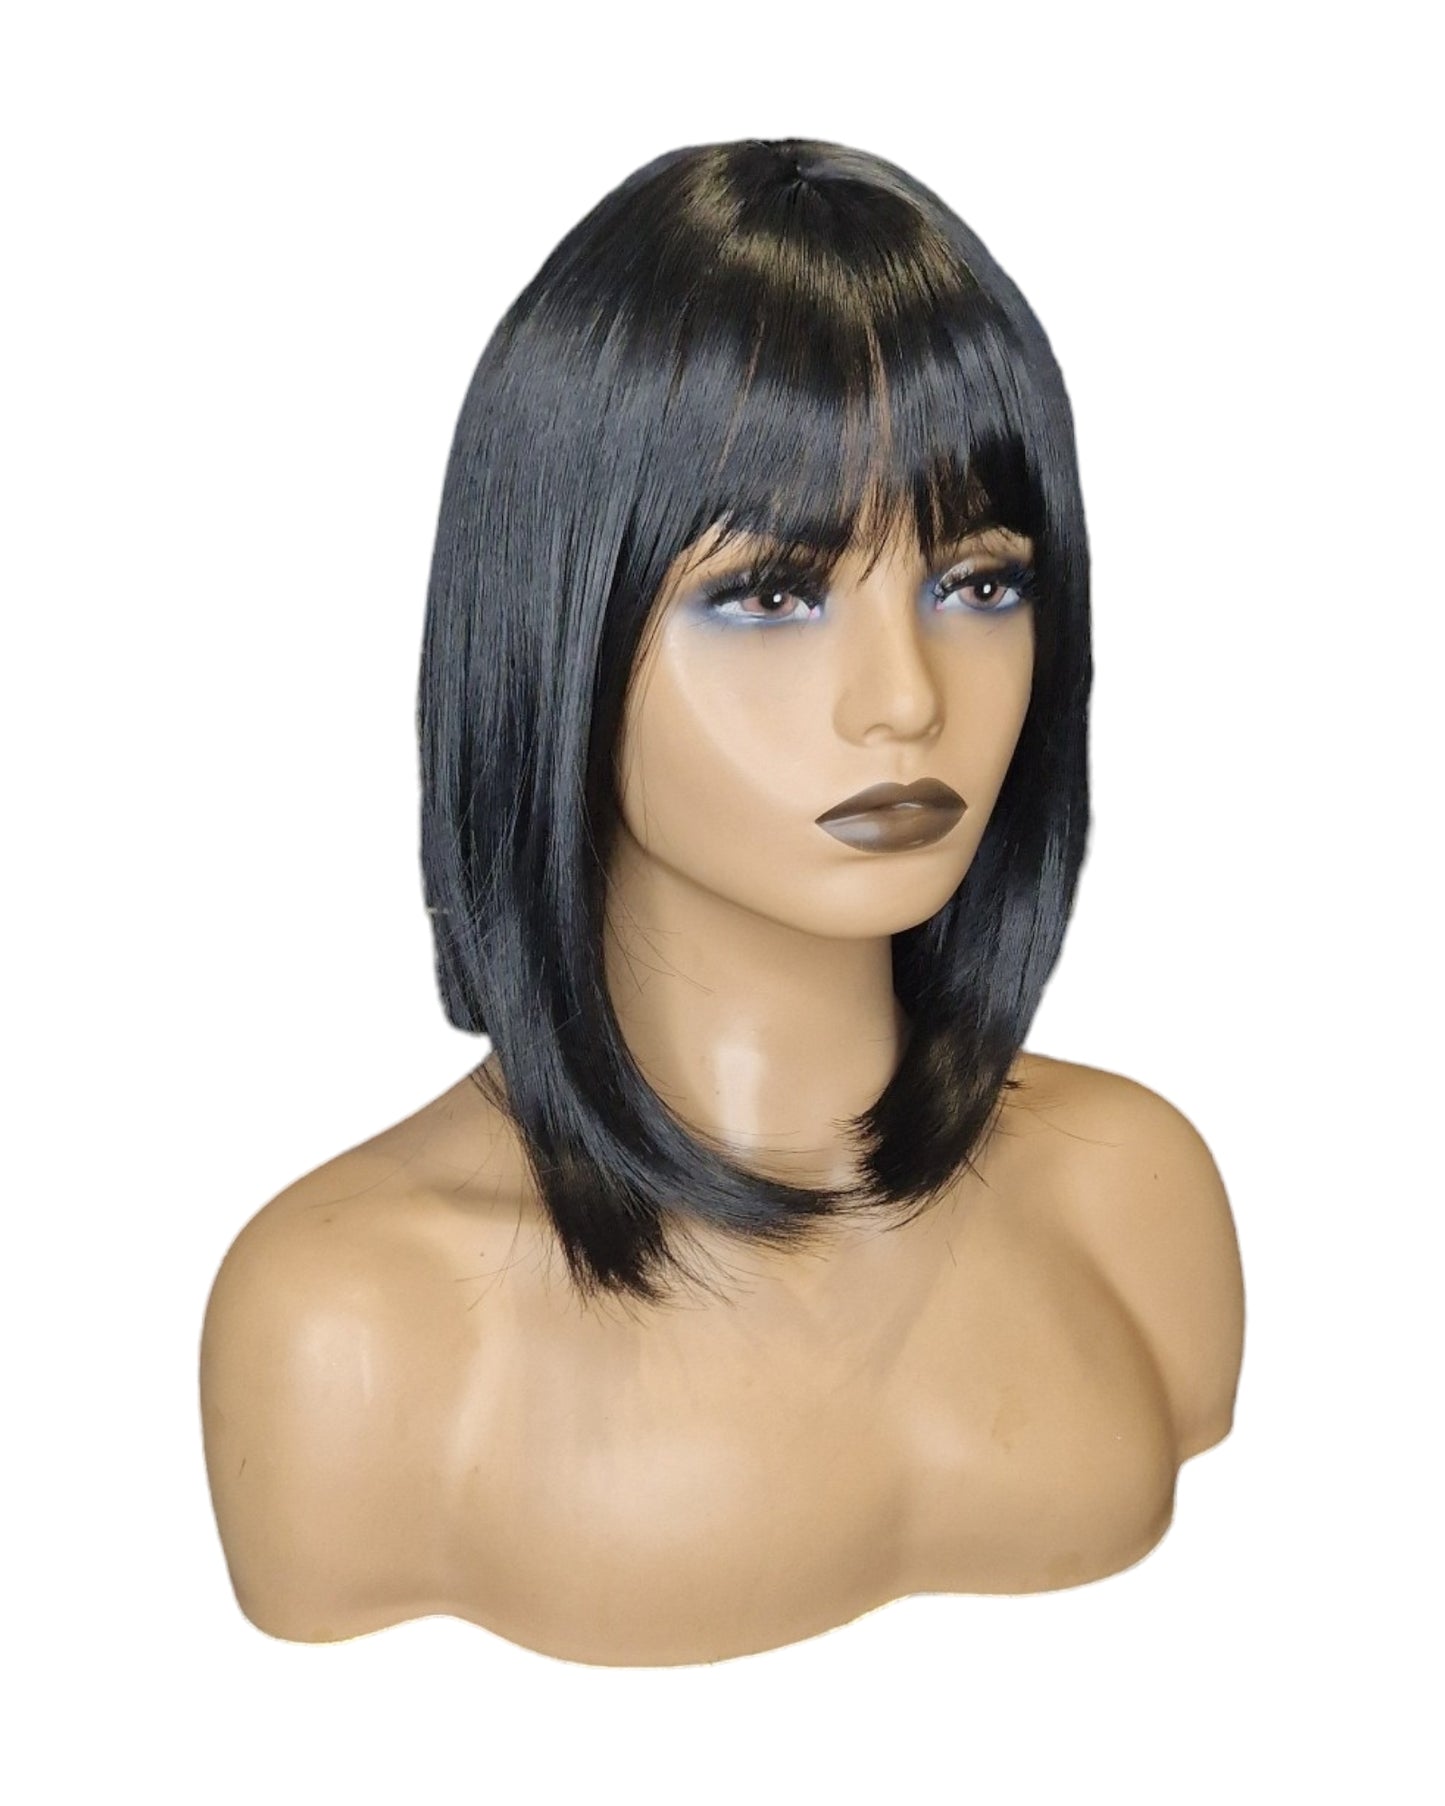 Black Bob Lob Hairstyle Wig. Katy